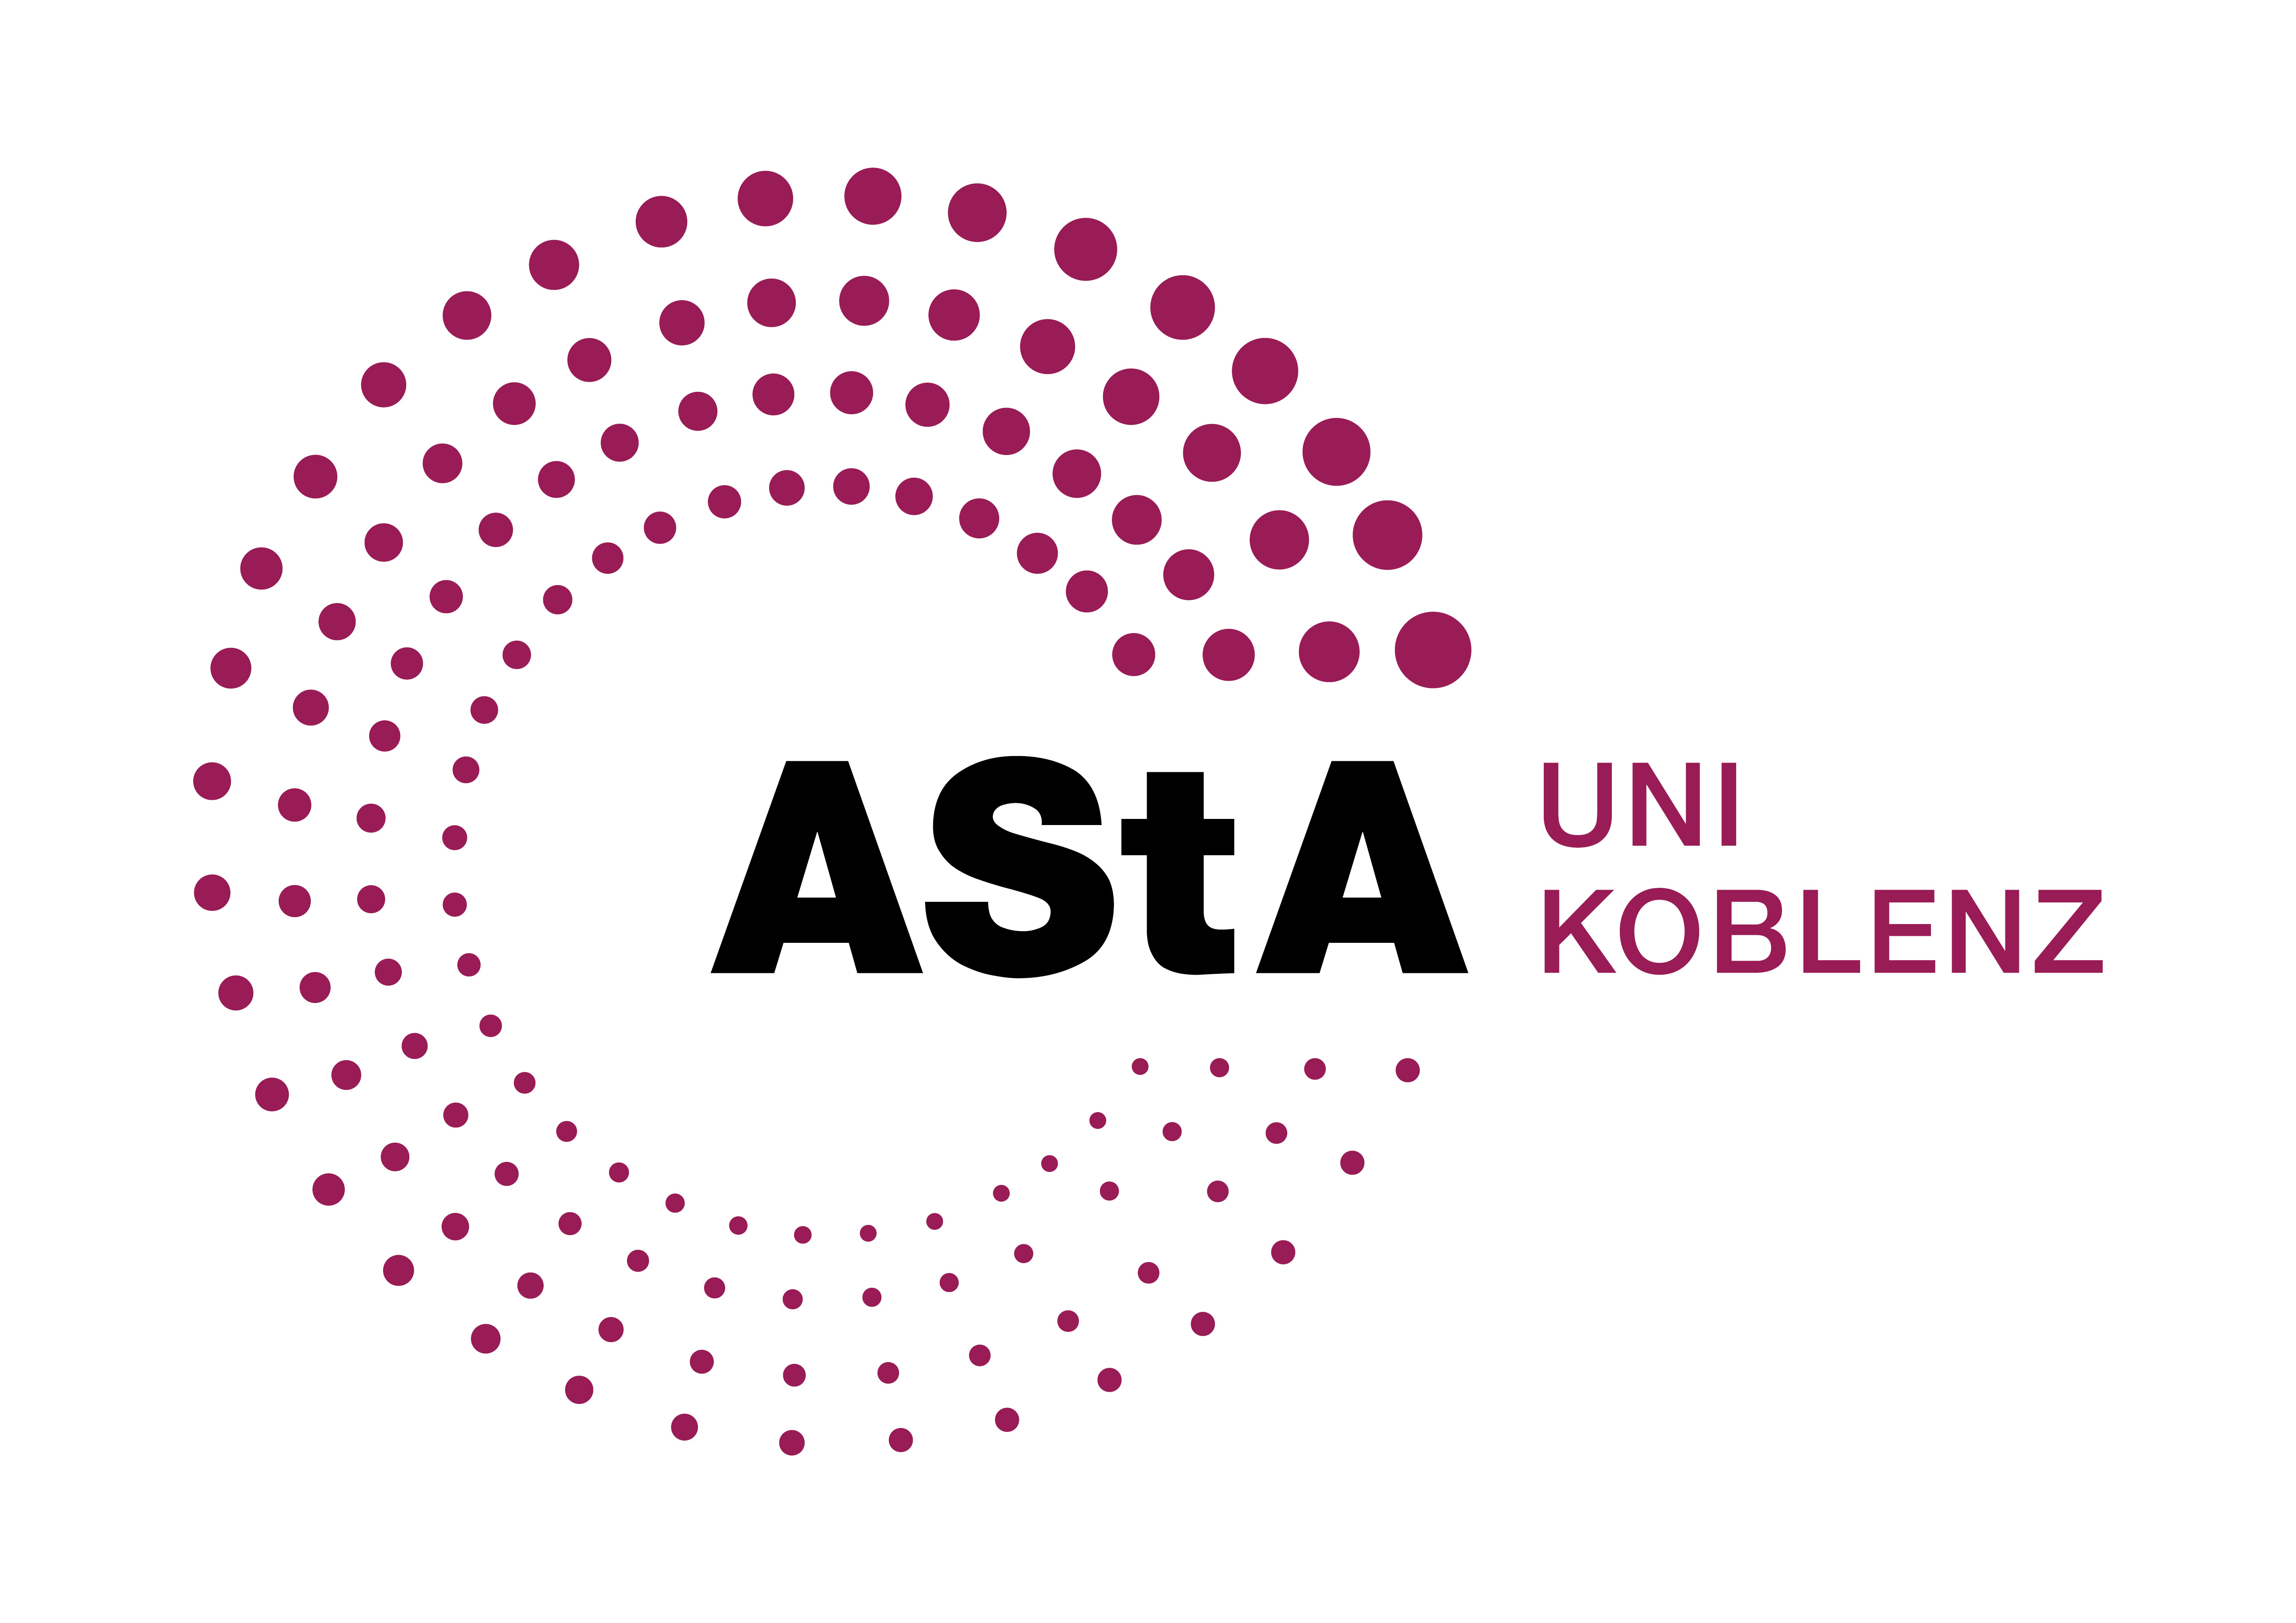 AStA_Logo_farbig_4c_grosse Aufloesung.jpg